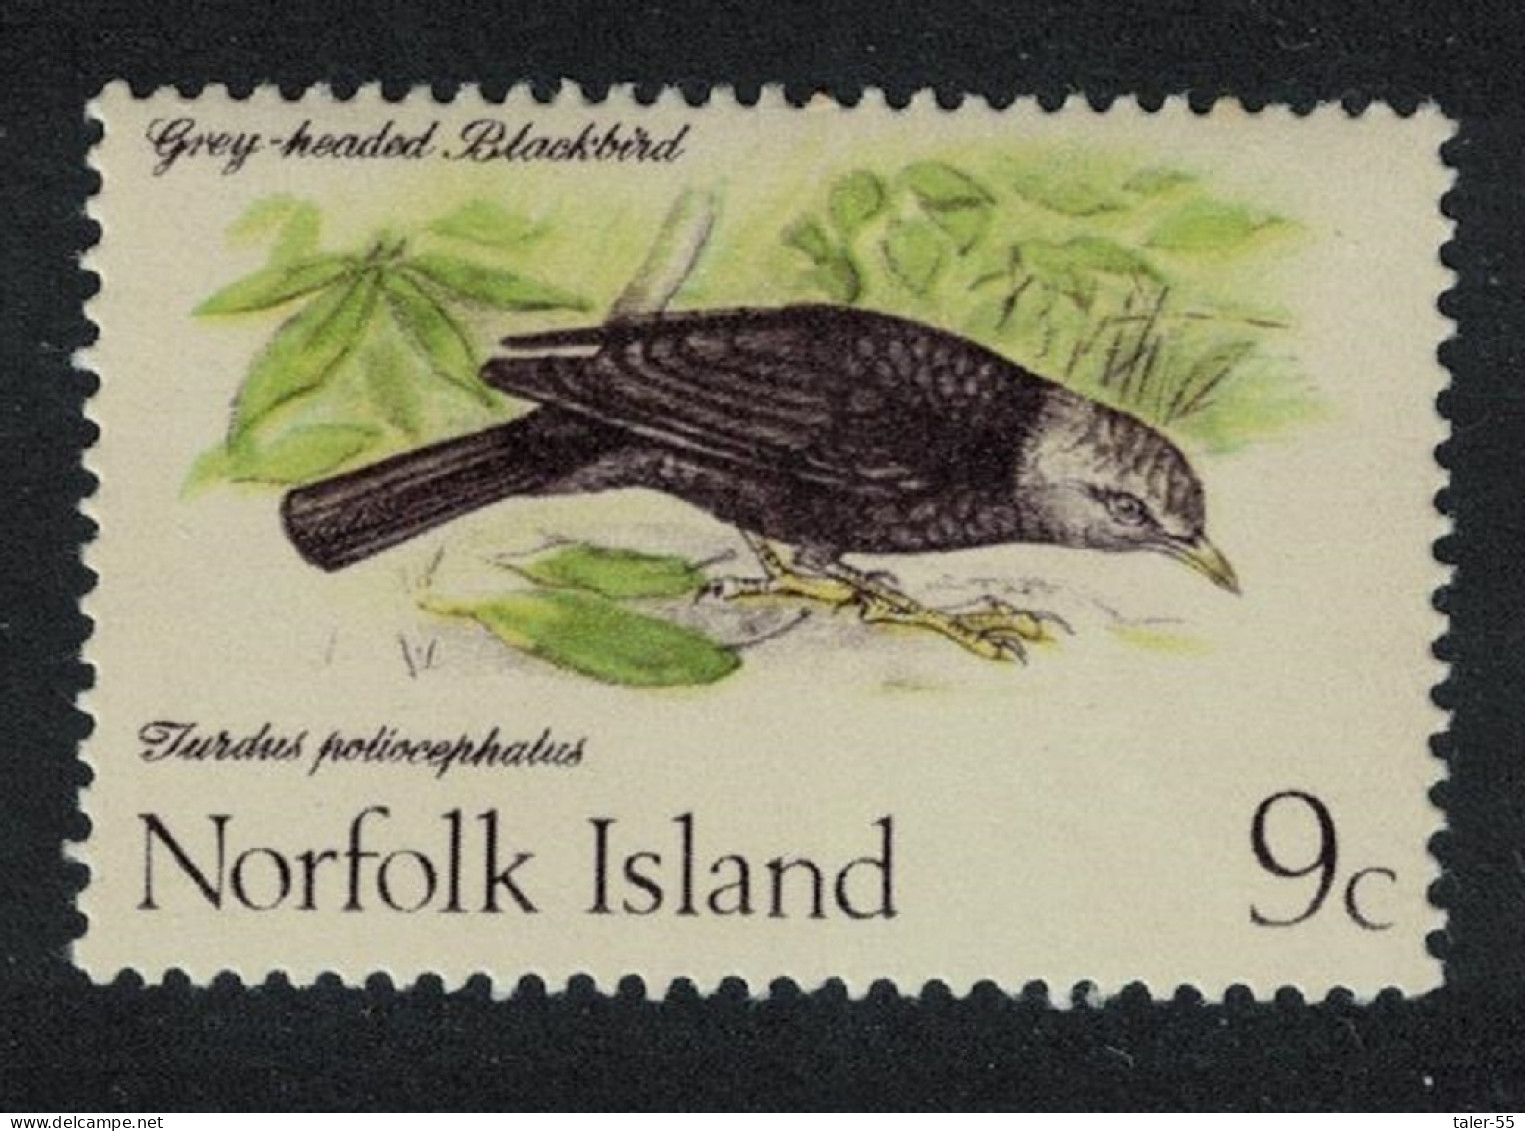 Norfolk Island Thrush Bird 9c 1970 MNH SG#109 - Norfolk Island